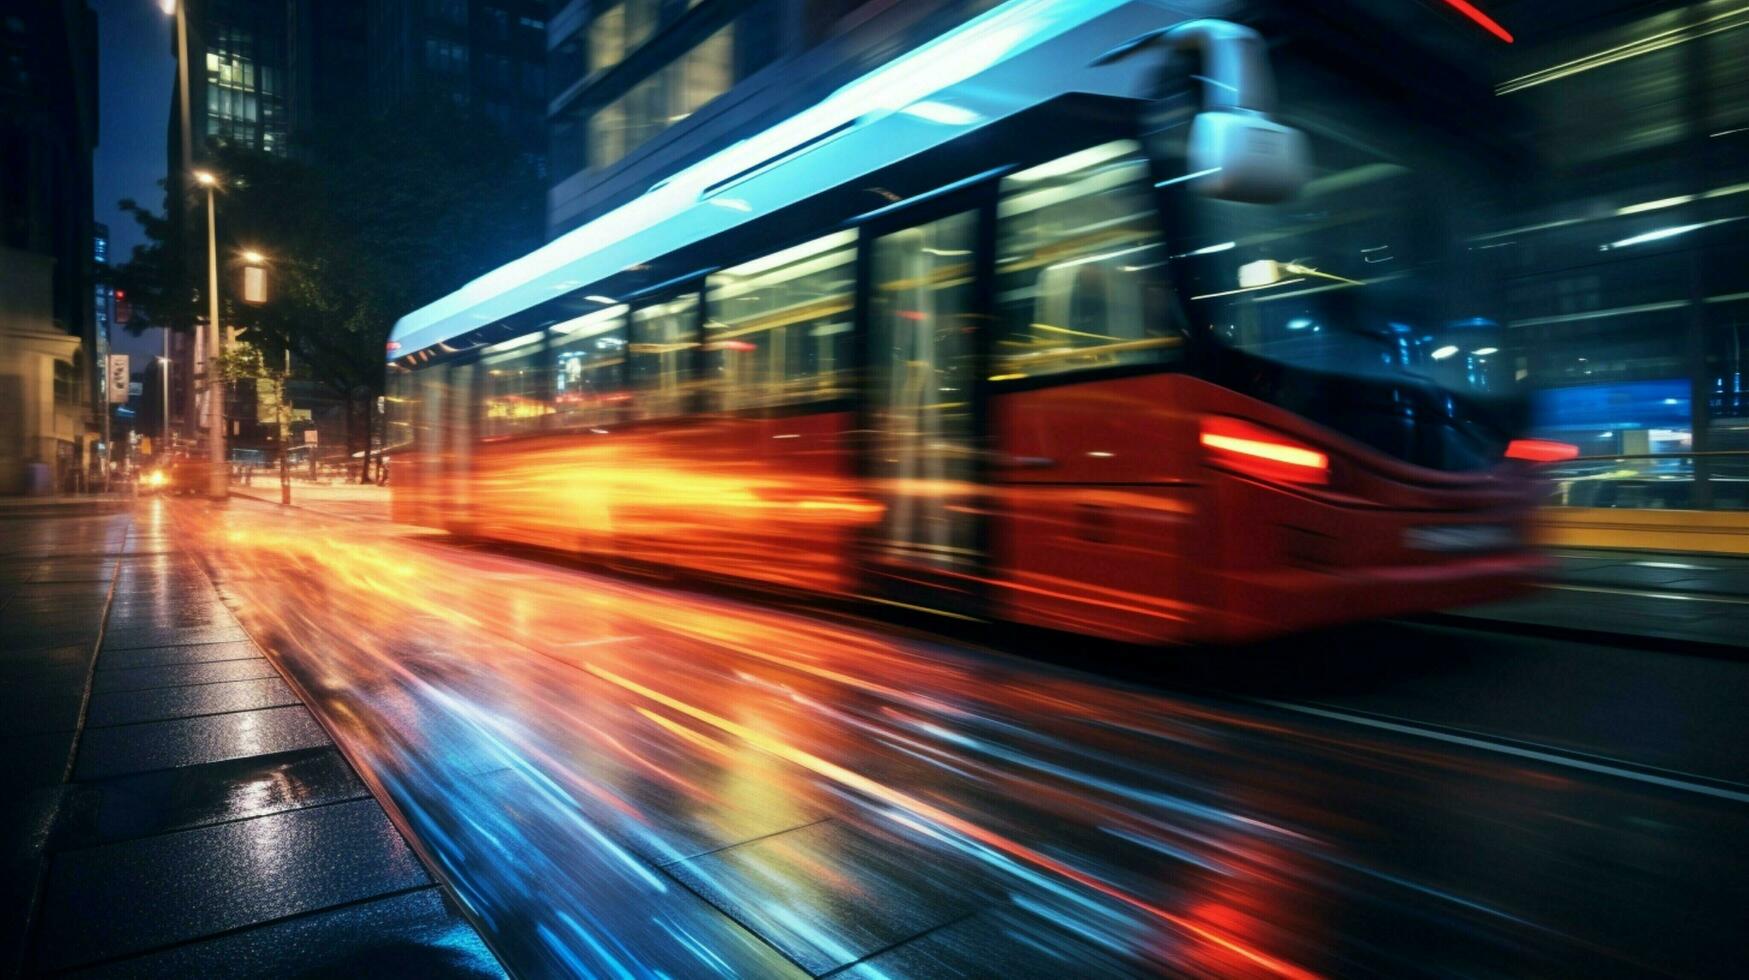 night transportation blurred motion modern city life photo